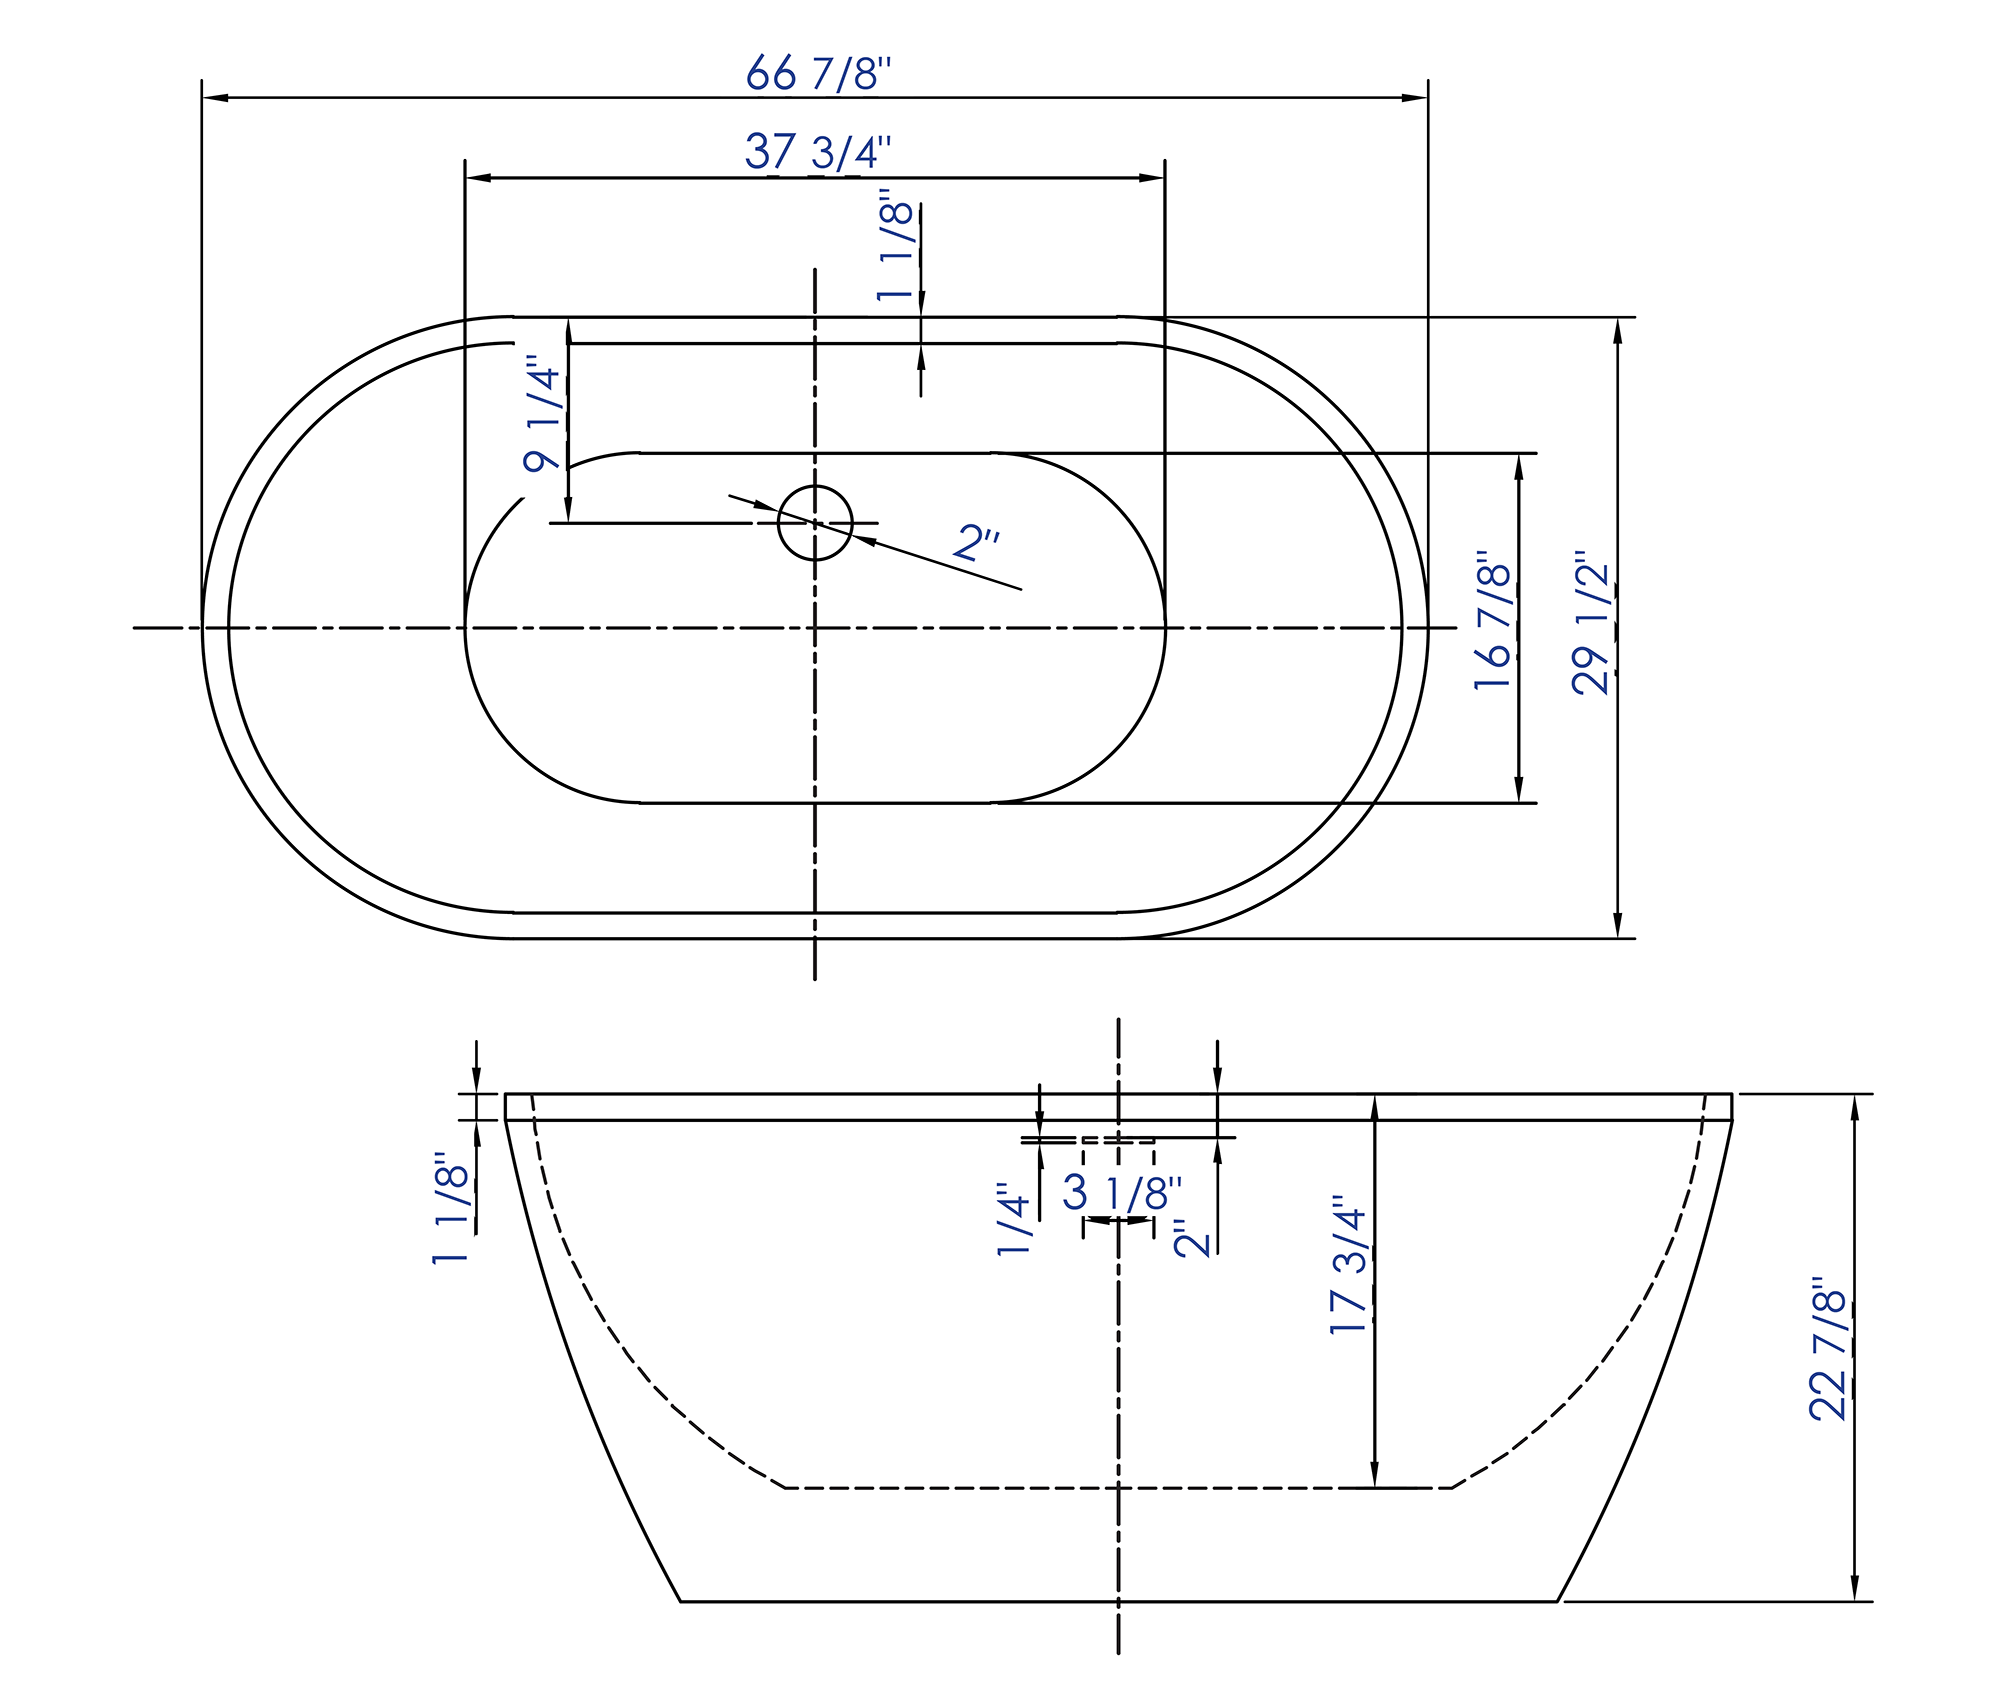 ALFI Brand - 67 inch White Oval Acrylic Free Standing Soaking Bathtub | AB8839